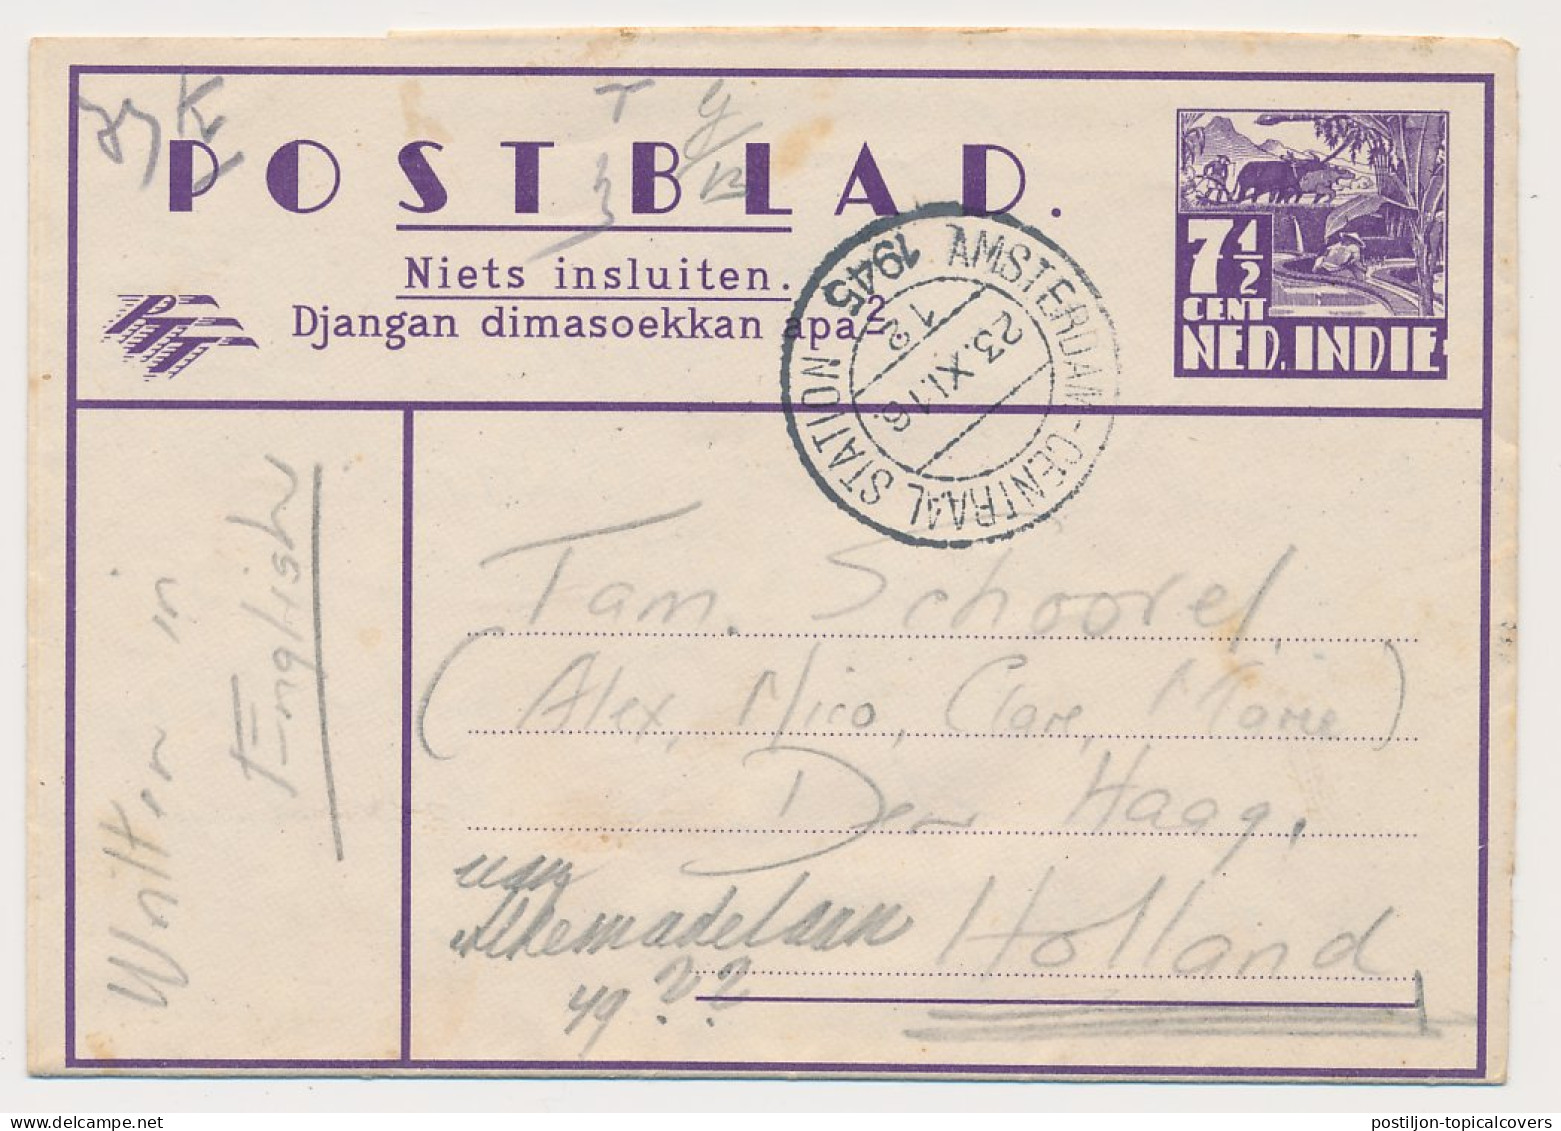 Postblad Camp Lampersari Semarang Neth. Indies - Den Haag 1945 - Netherlands Indies